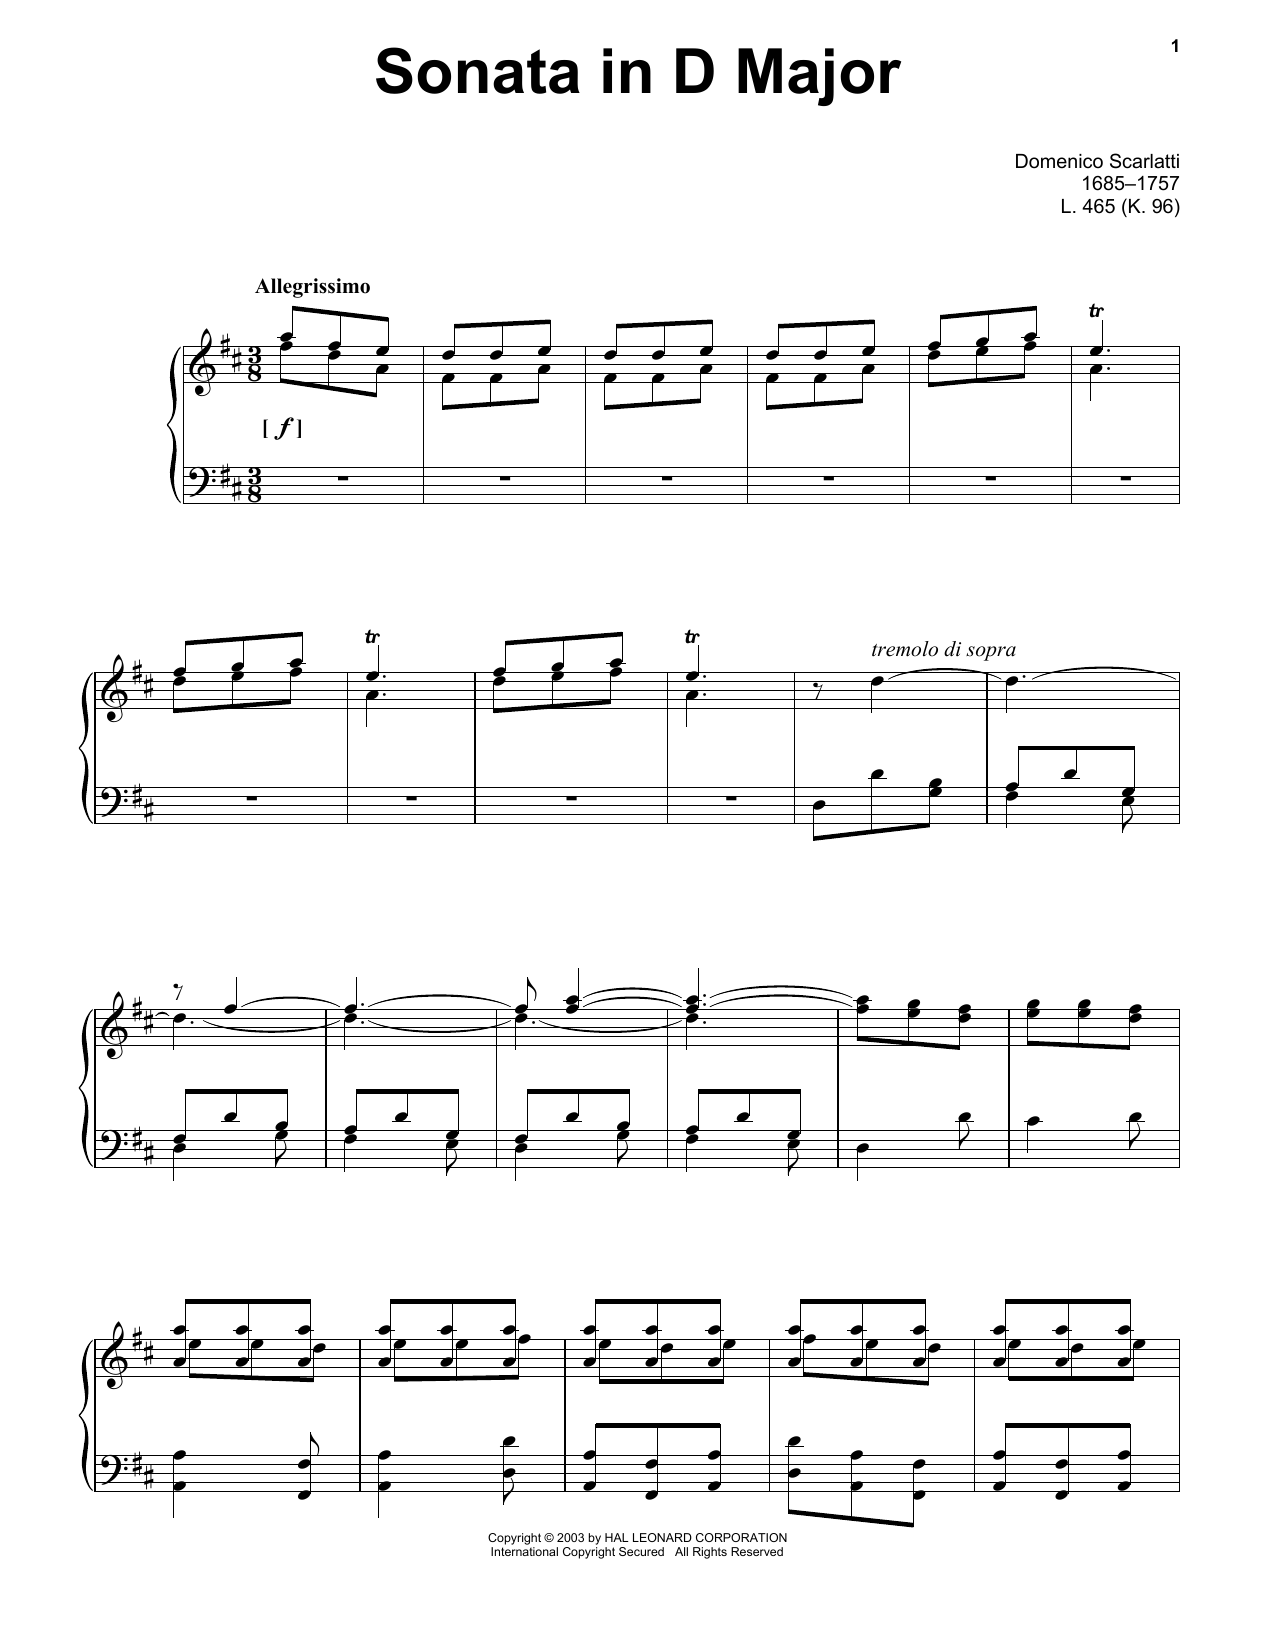 Domenico Scarlatti Sonata In D Major, K. 96 sheet music notes printable PDF score